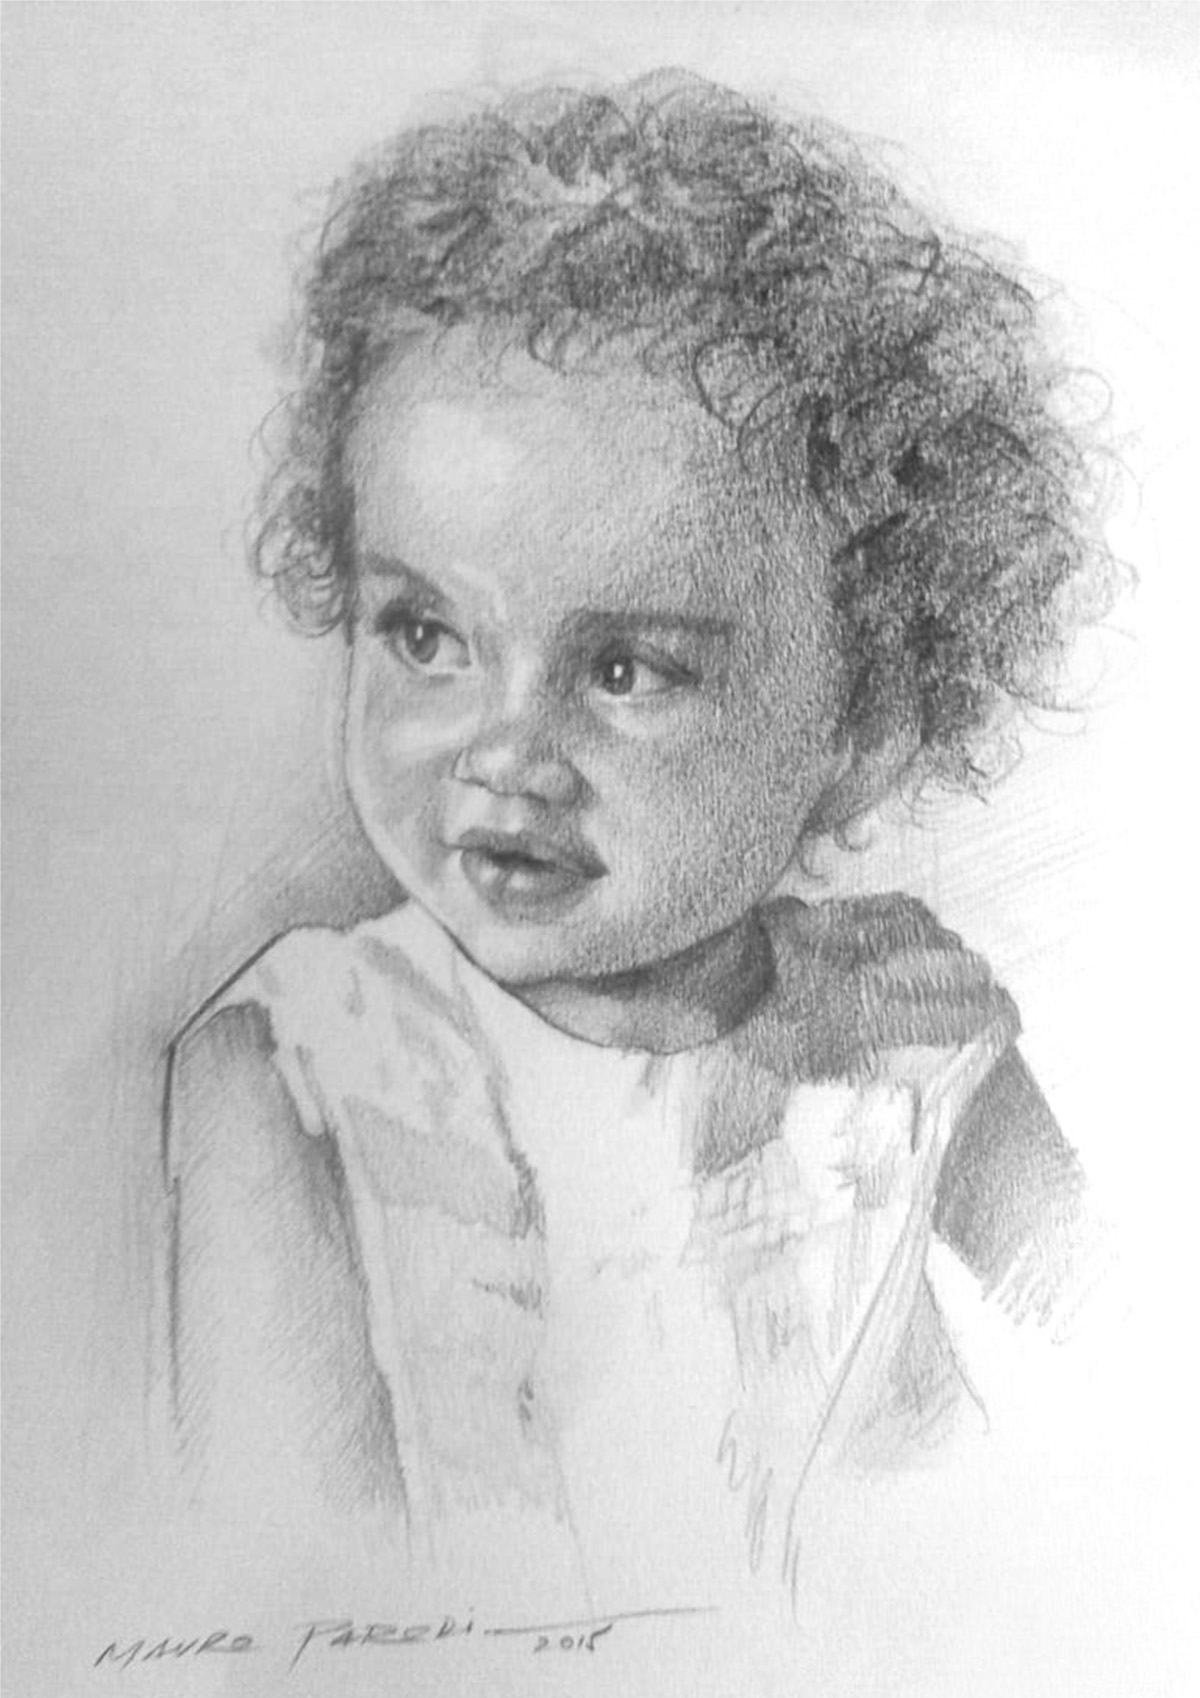 Retrato de una niña realizado por Mauro Parodi